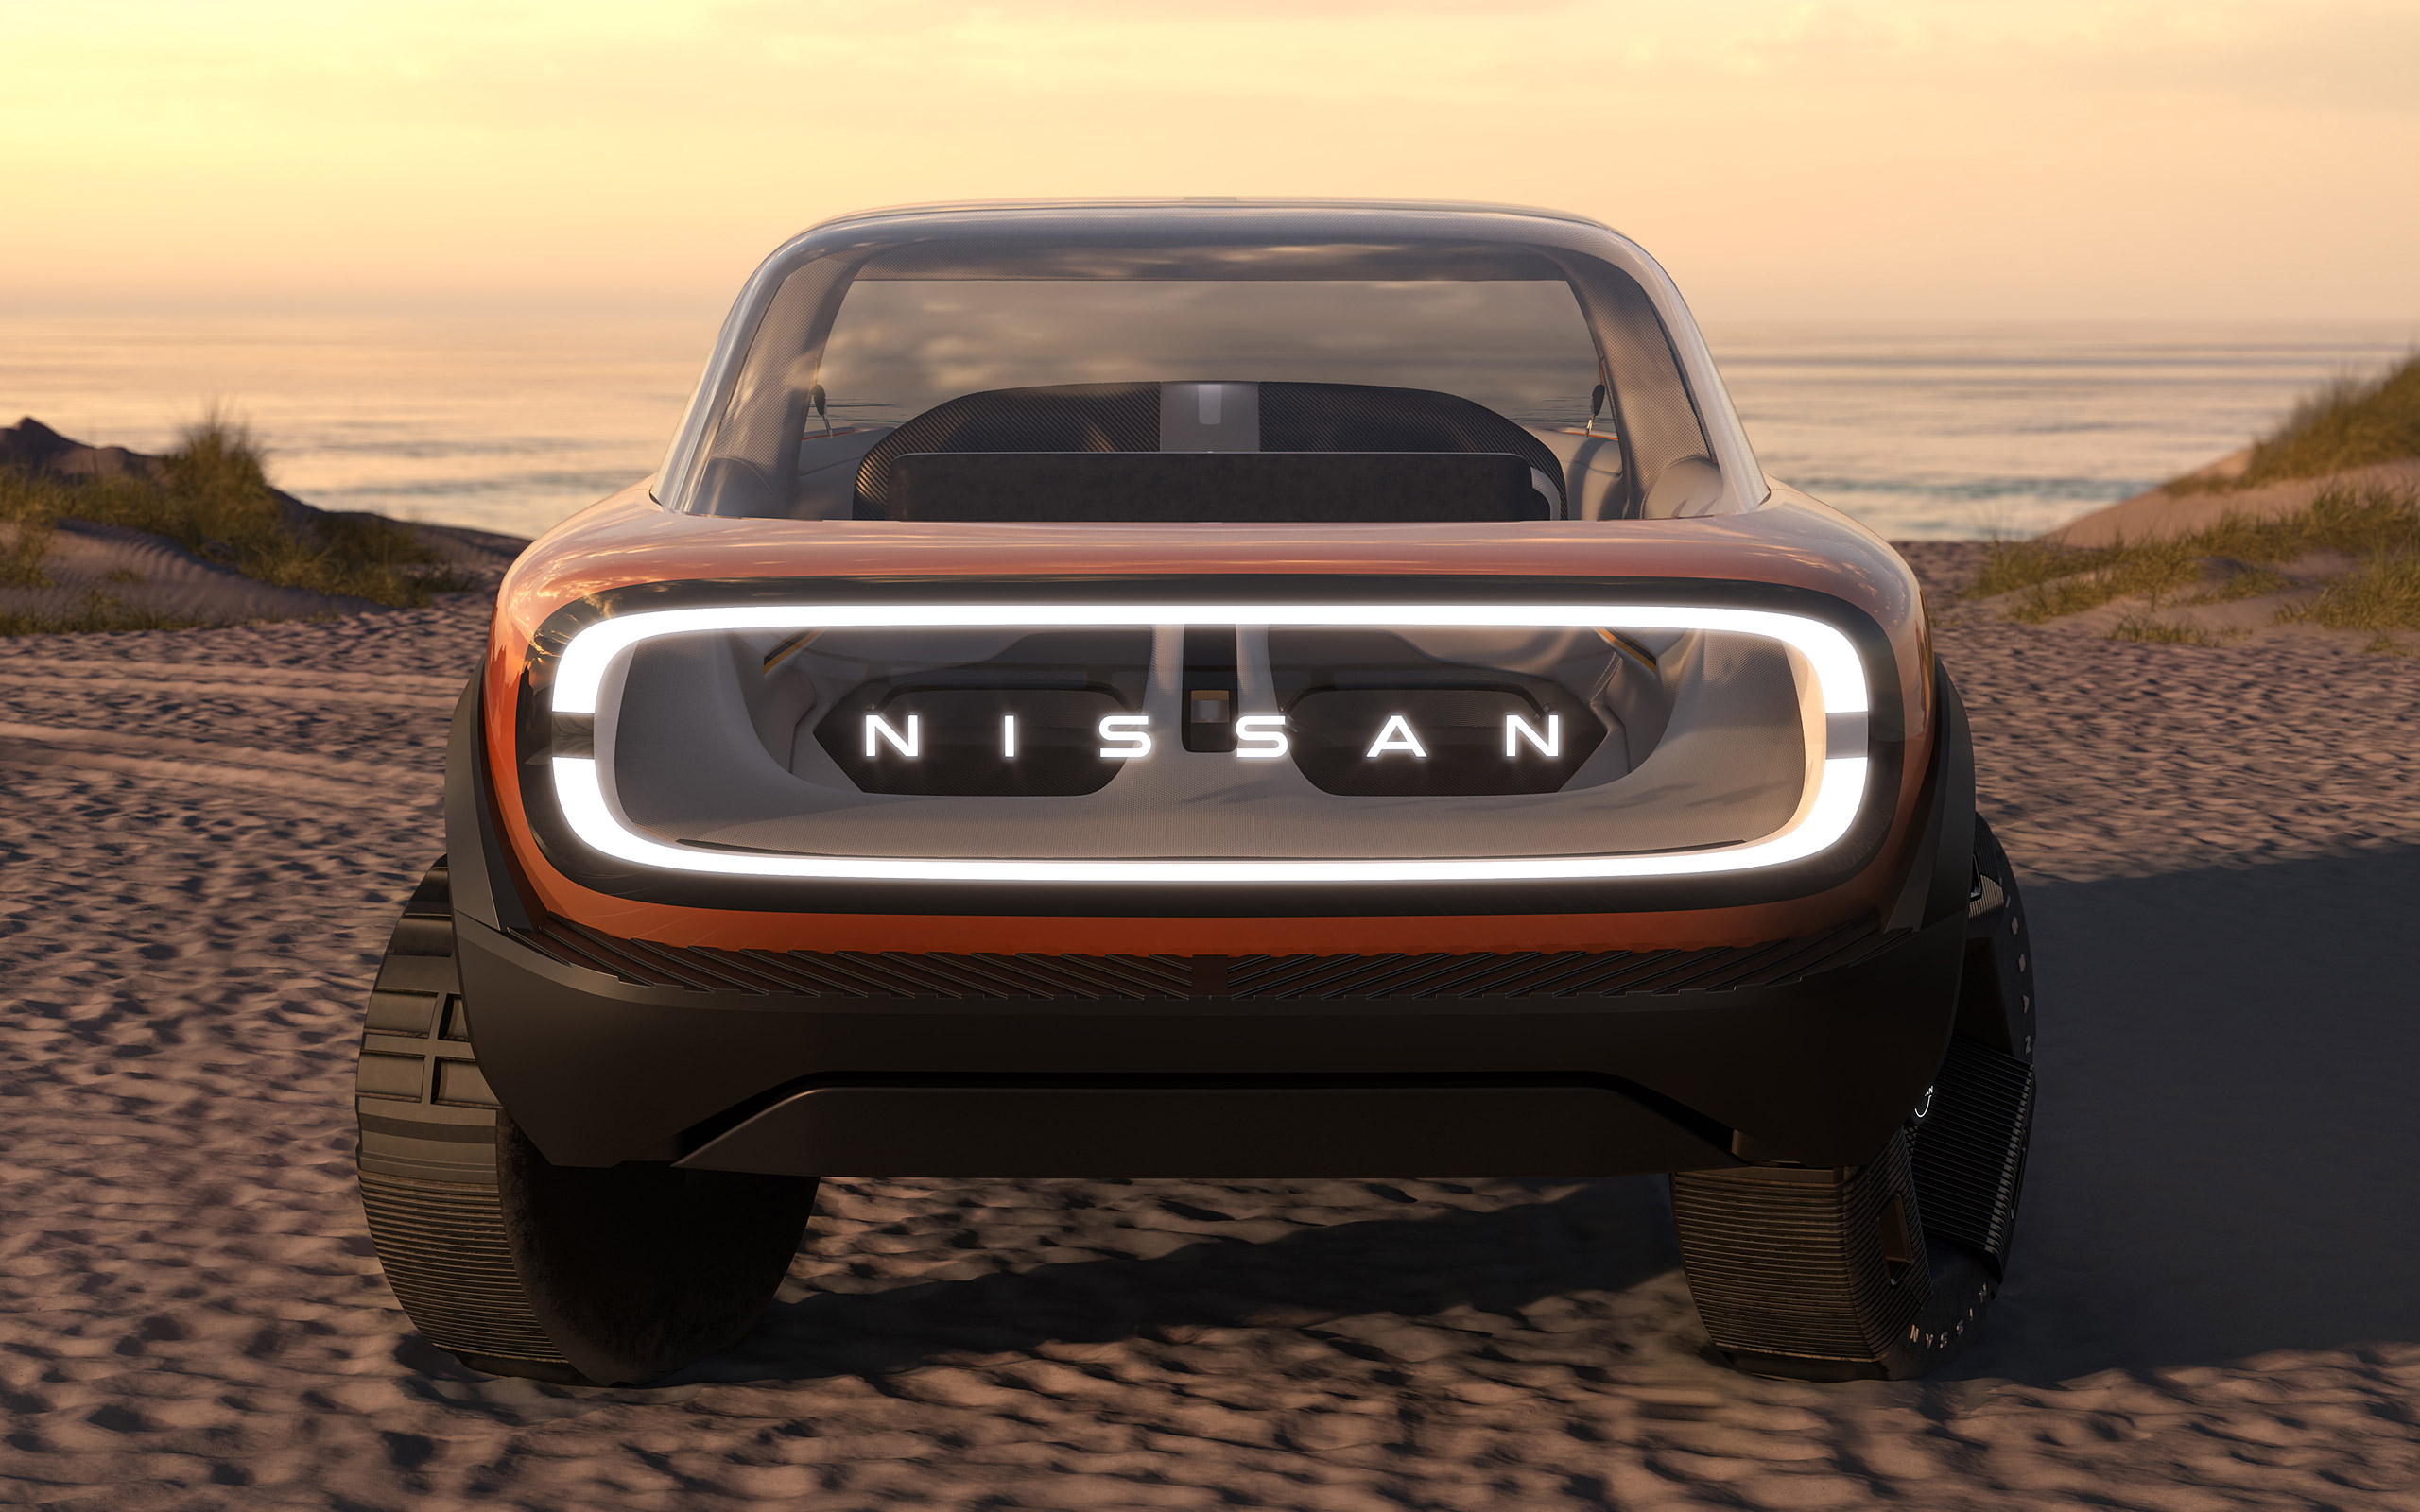  2021 Nissan Surf-Out Concept Wallpaper.